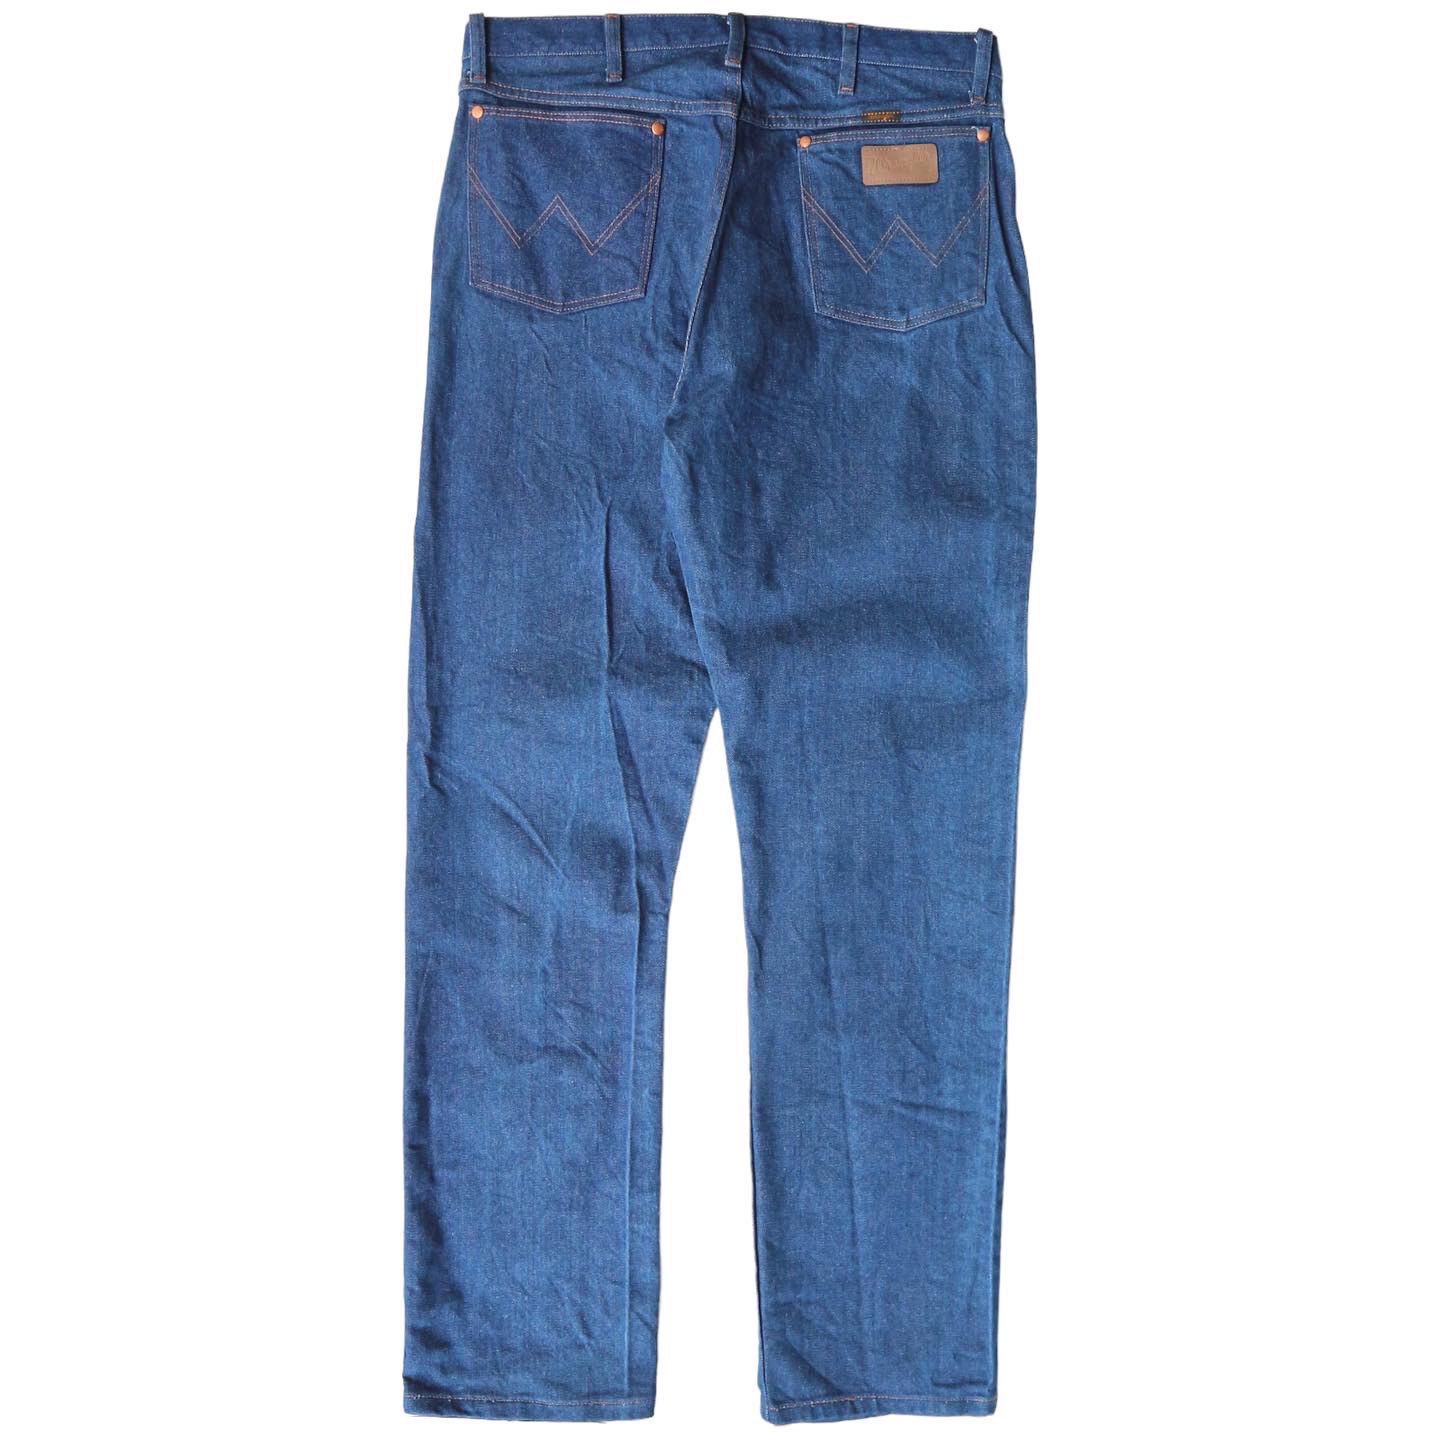 Wrangler Jeans Size 38